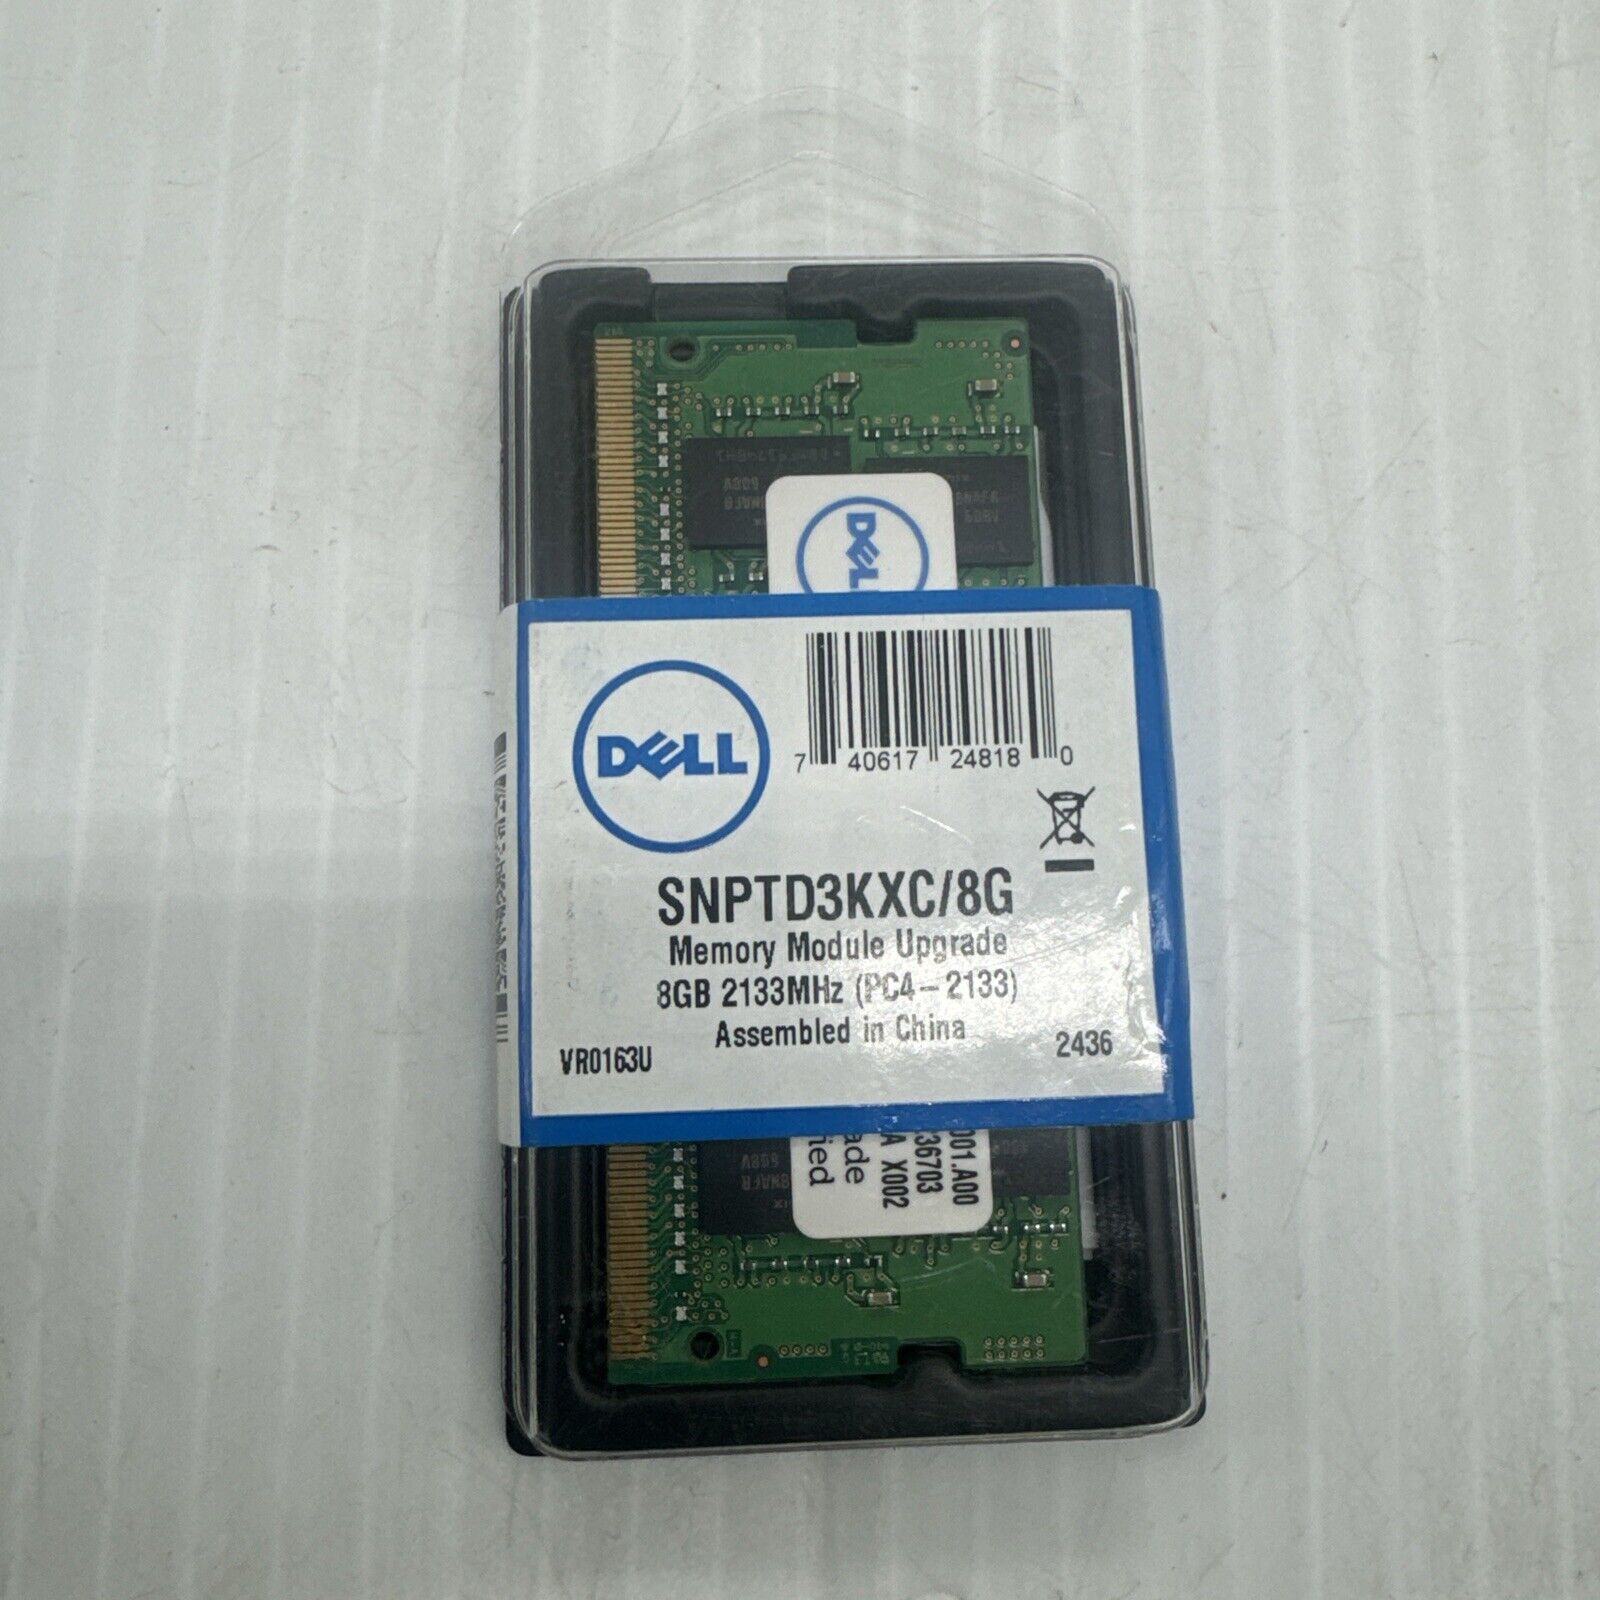 Dell SNPTD3KXC/8G 8GB 2133MHz (PC4-2133) Memory Upgrade NEW SEALED